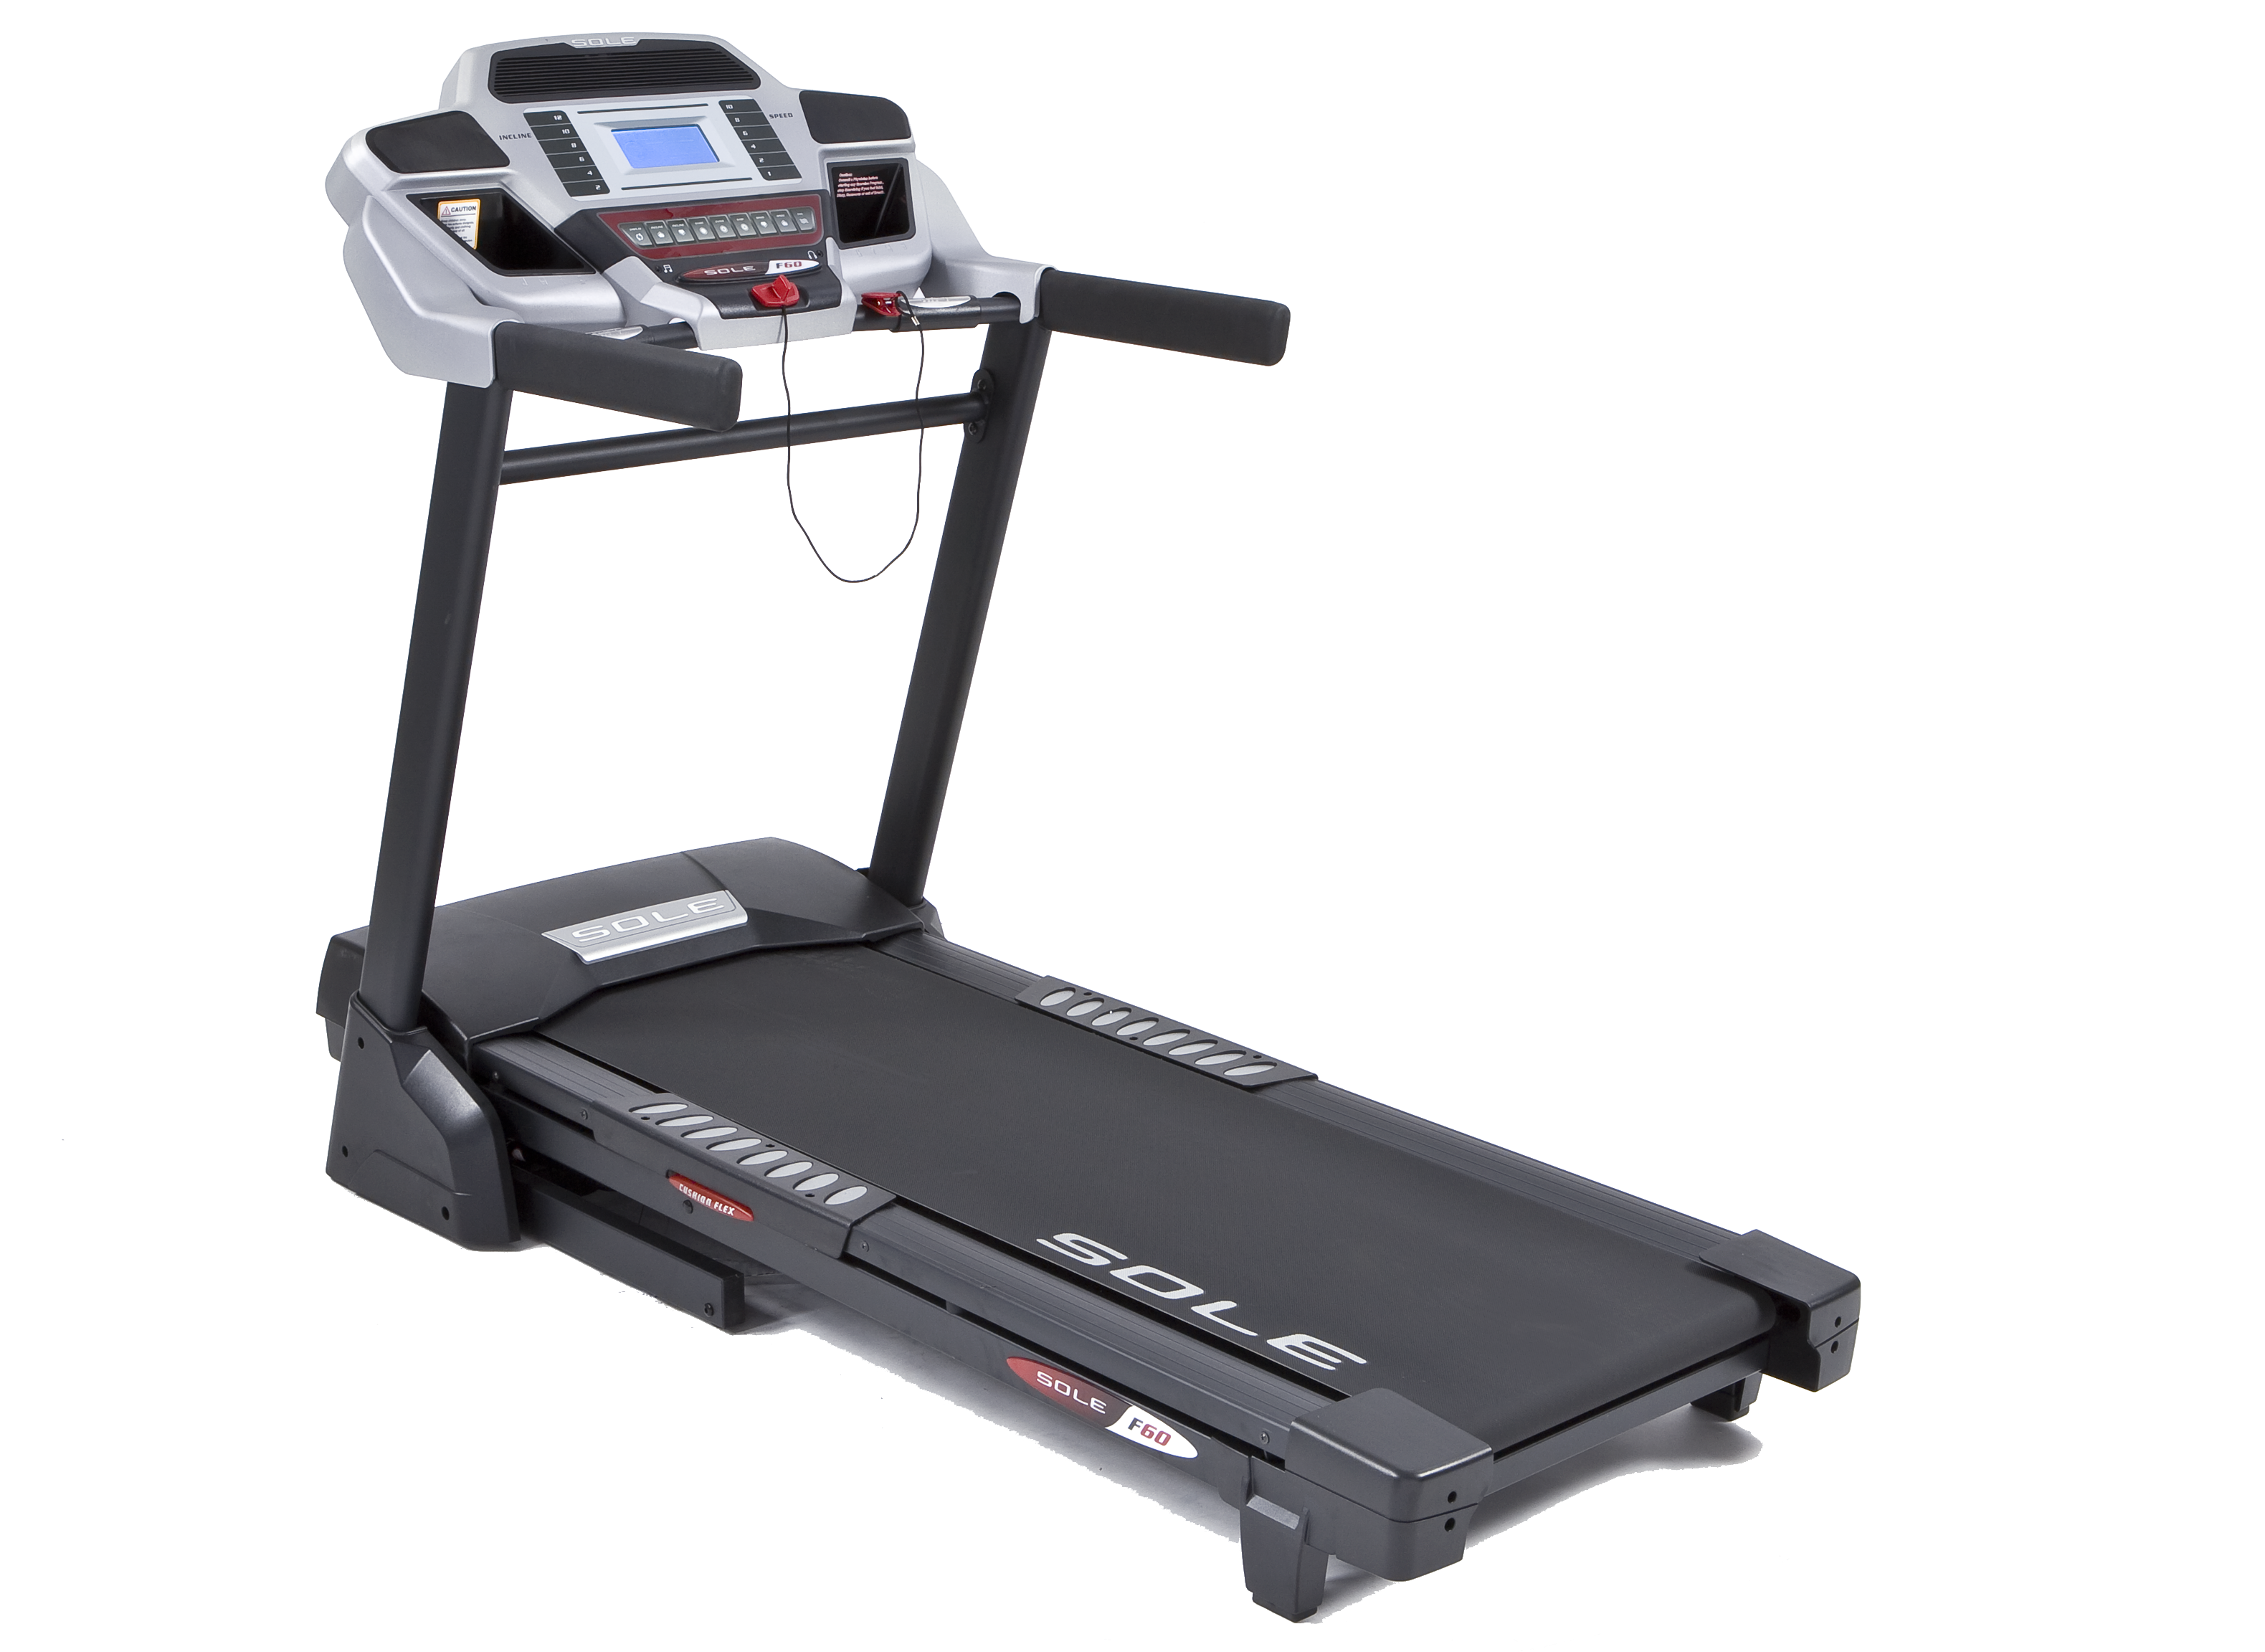 Sole F60 Treadmill: A Comprehensive Review